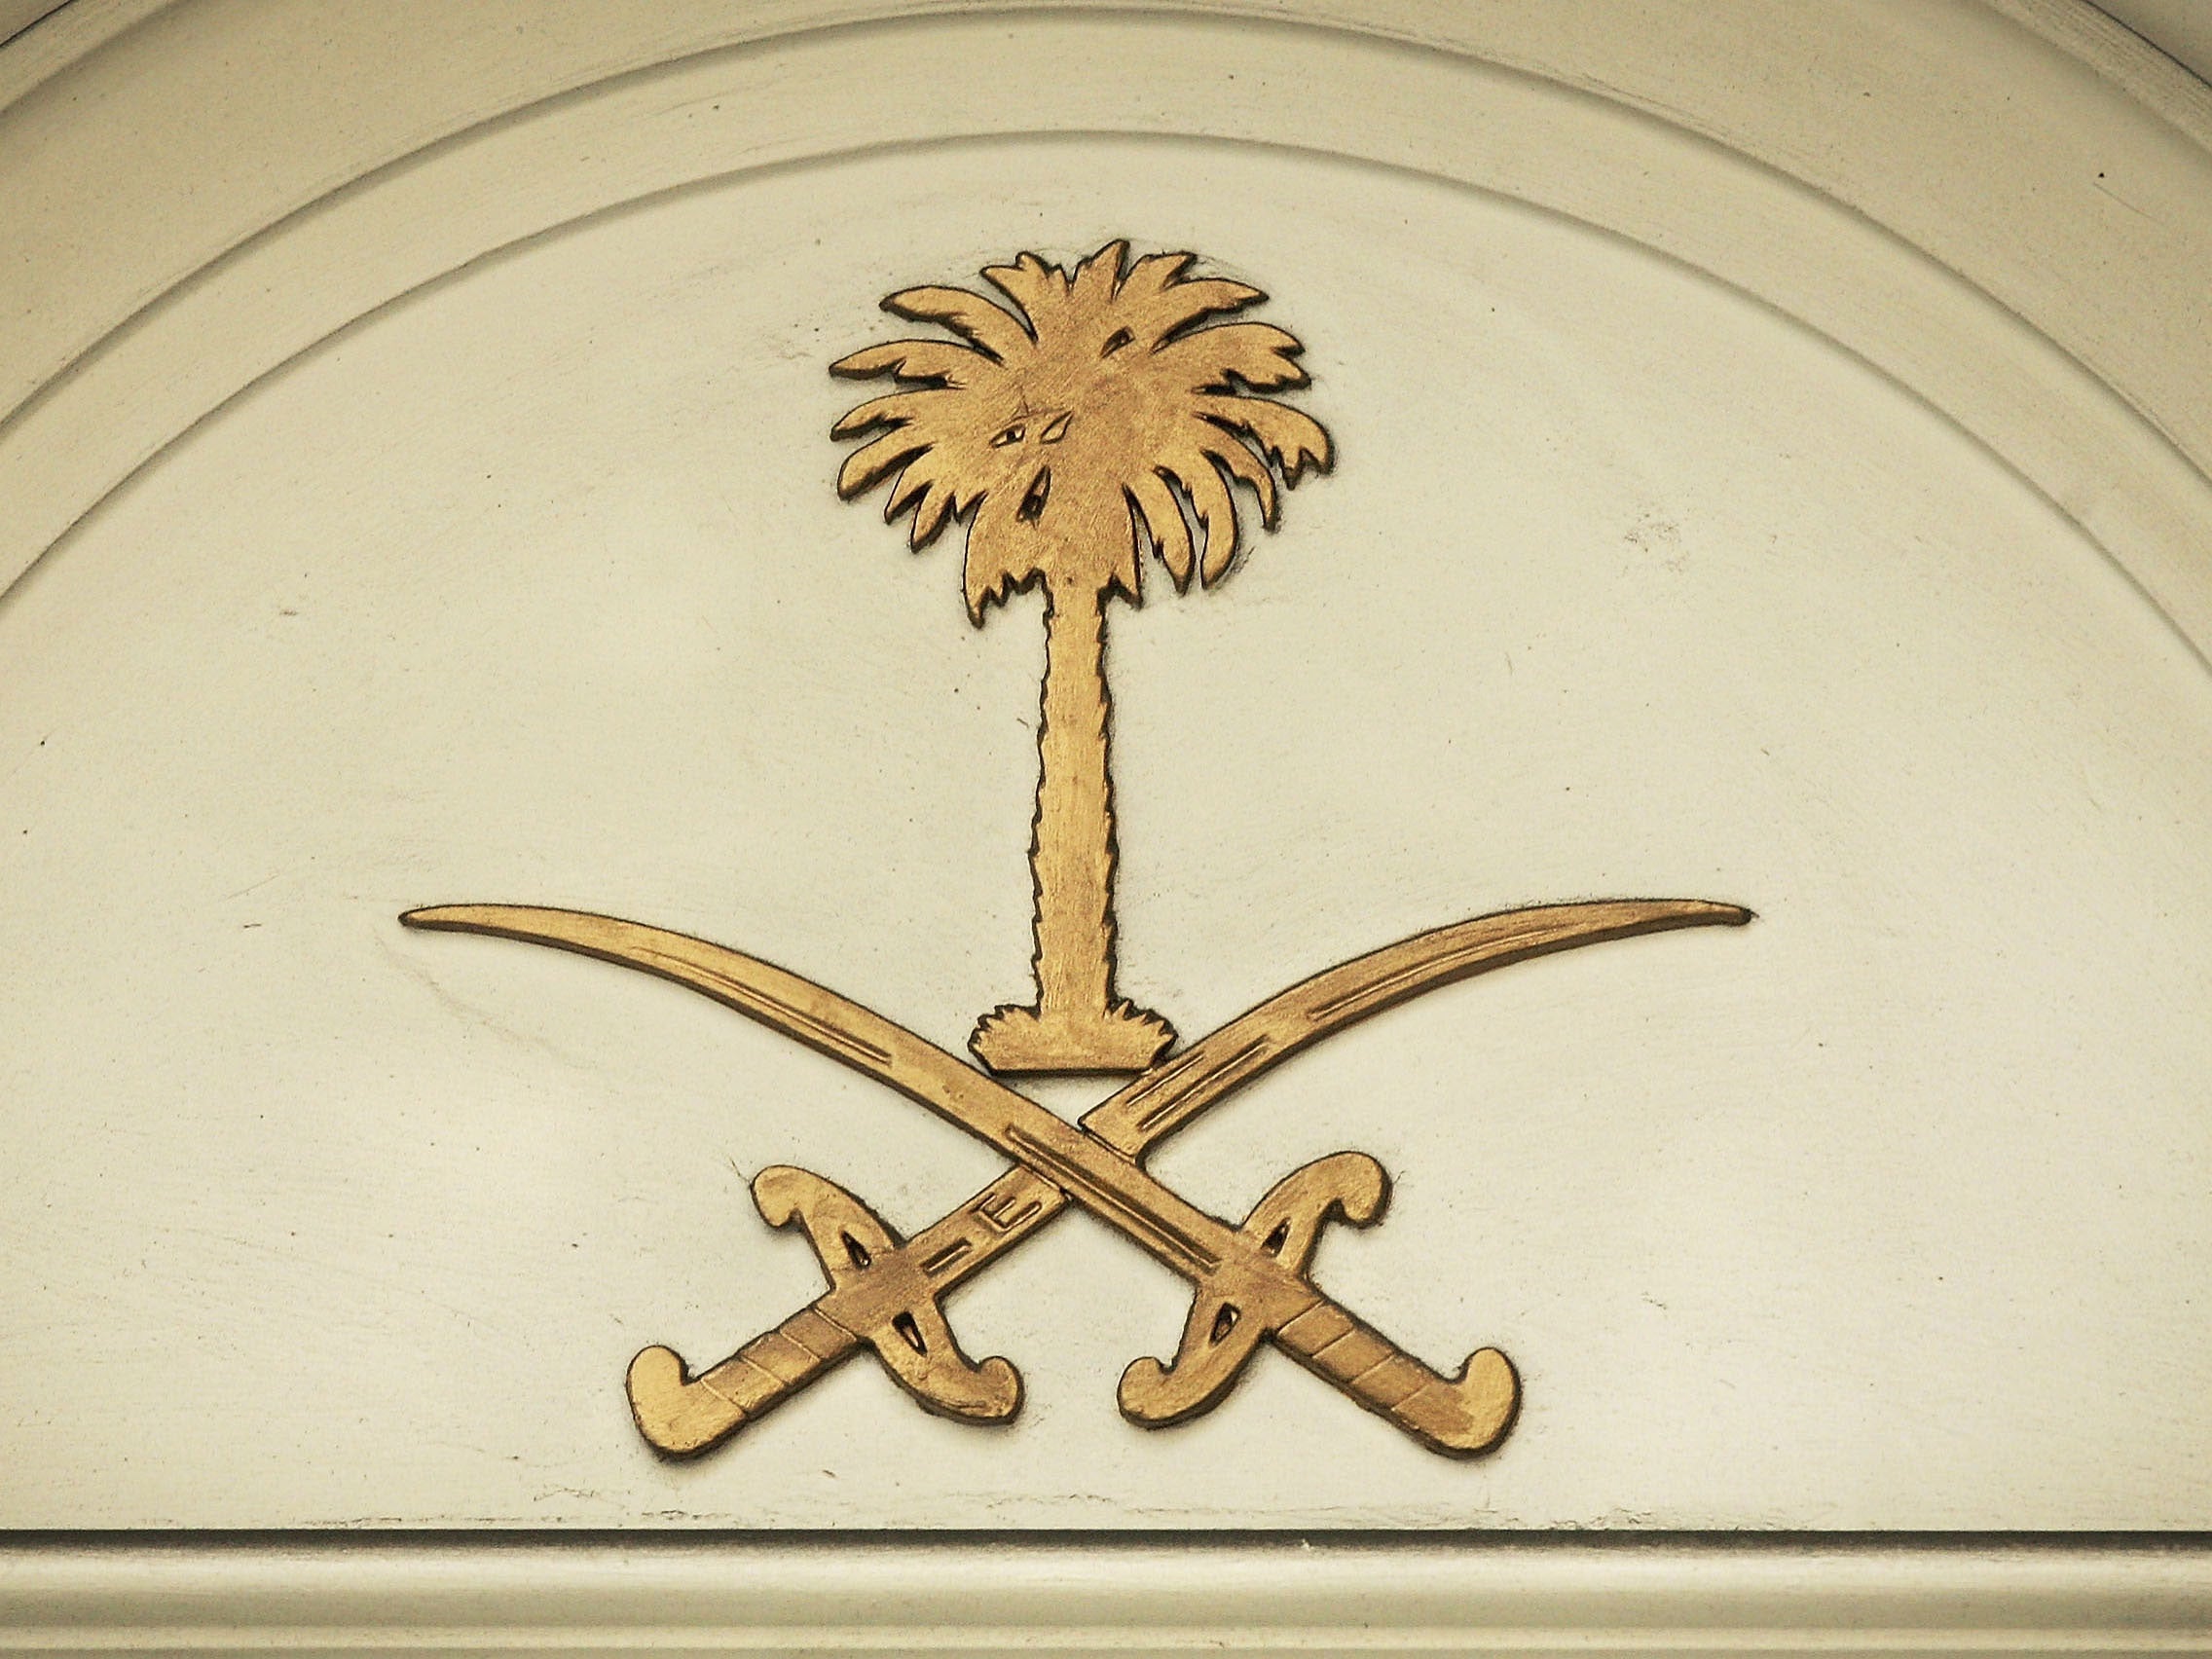 The Saudi Royal crest on the Saudi embassy in London